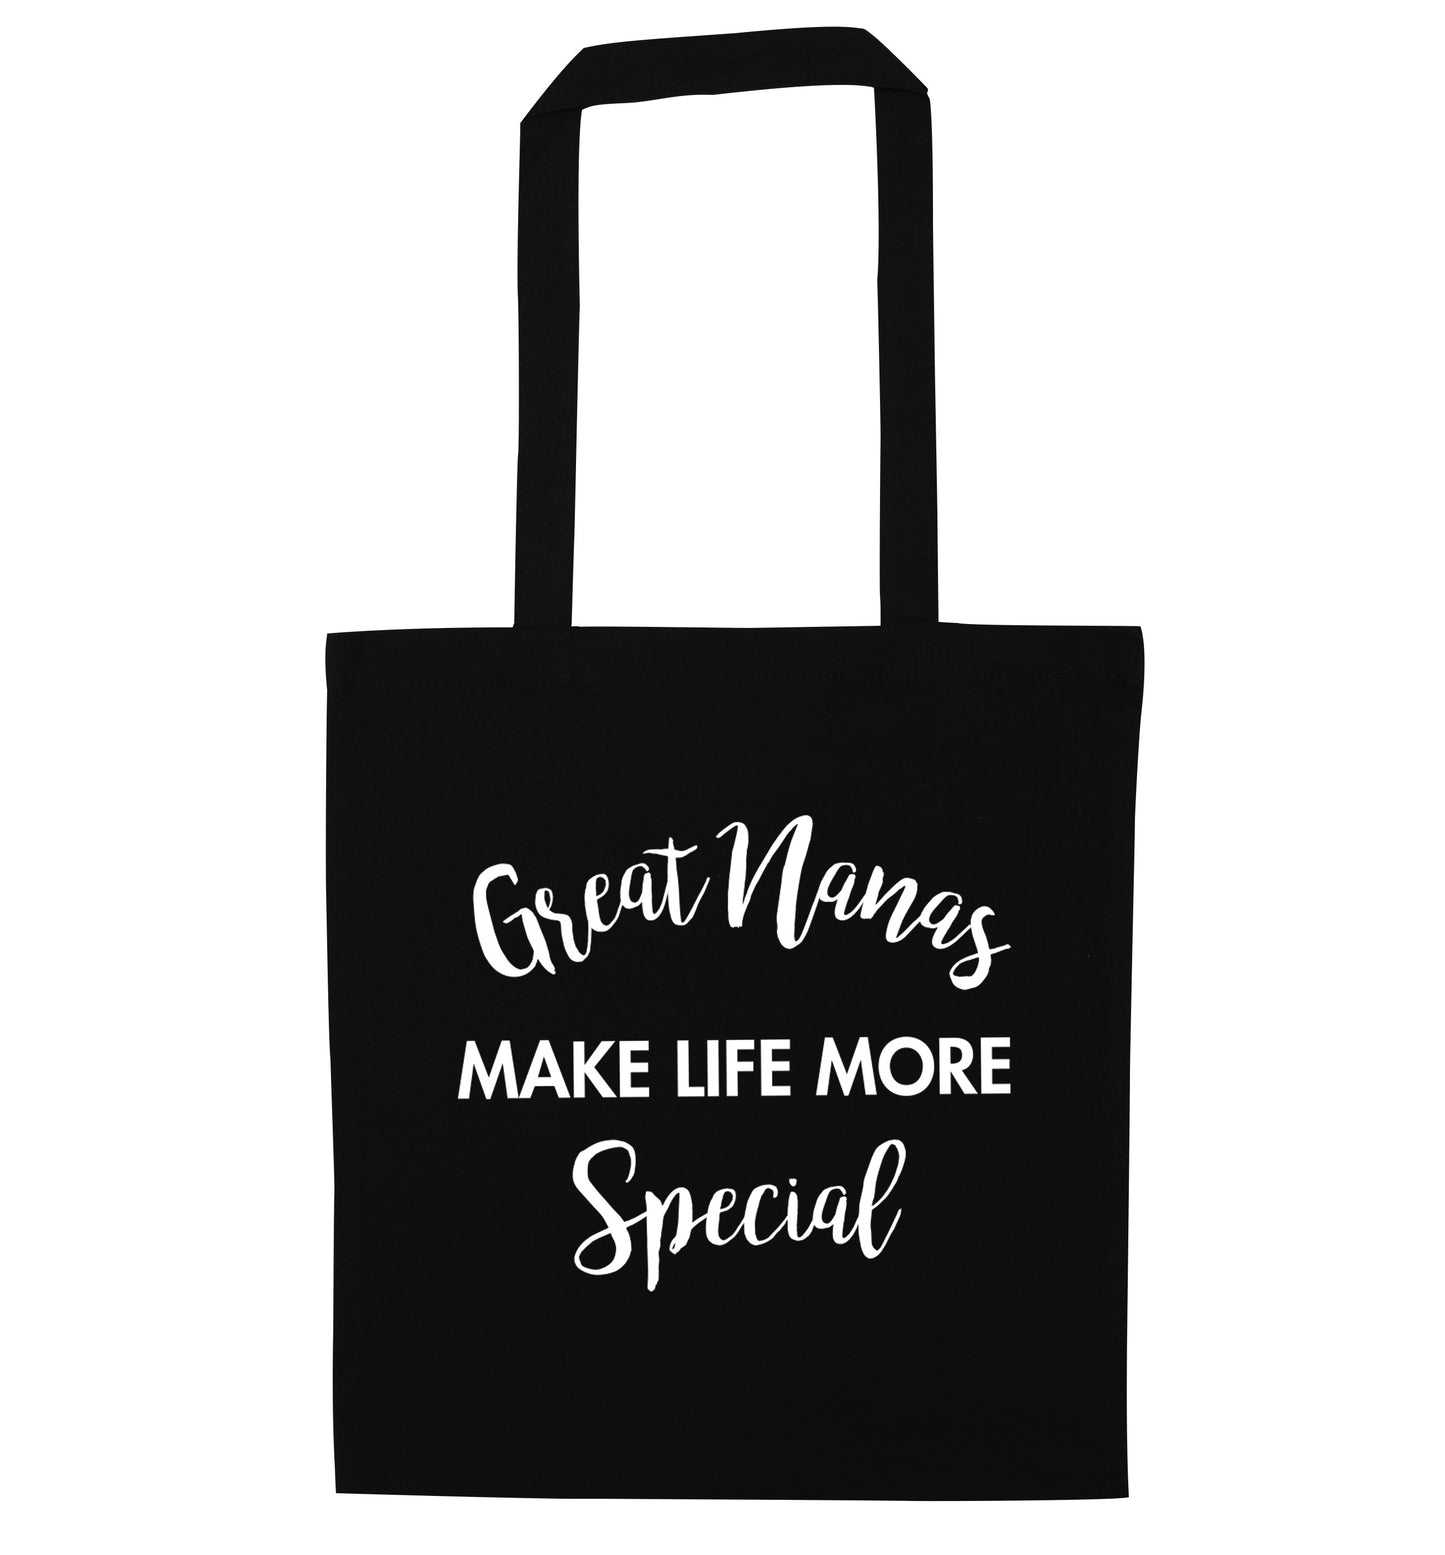 Great nanas make life more special black tote bag